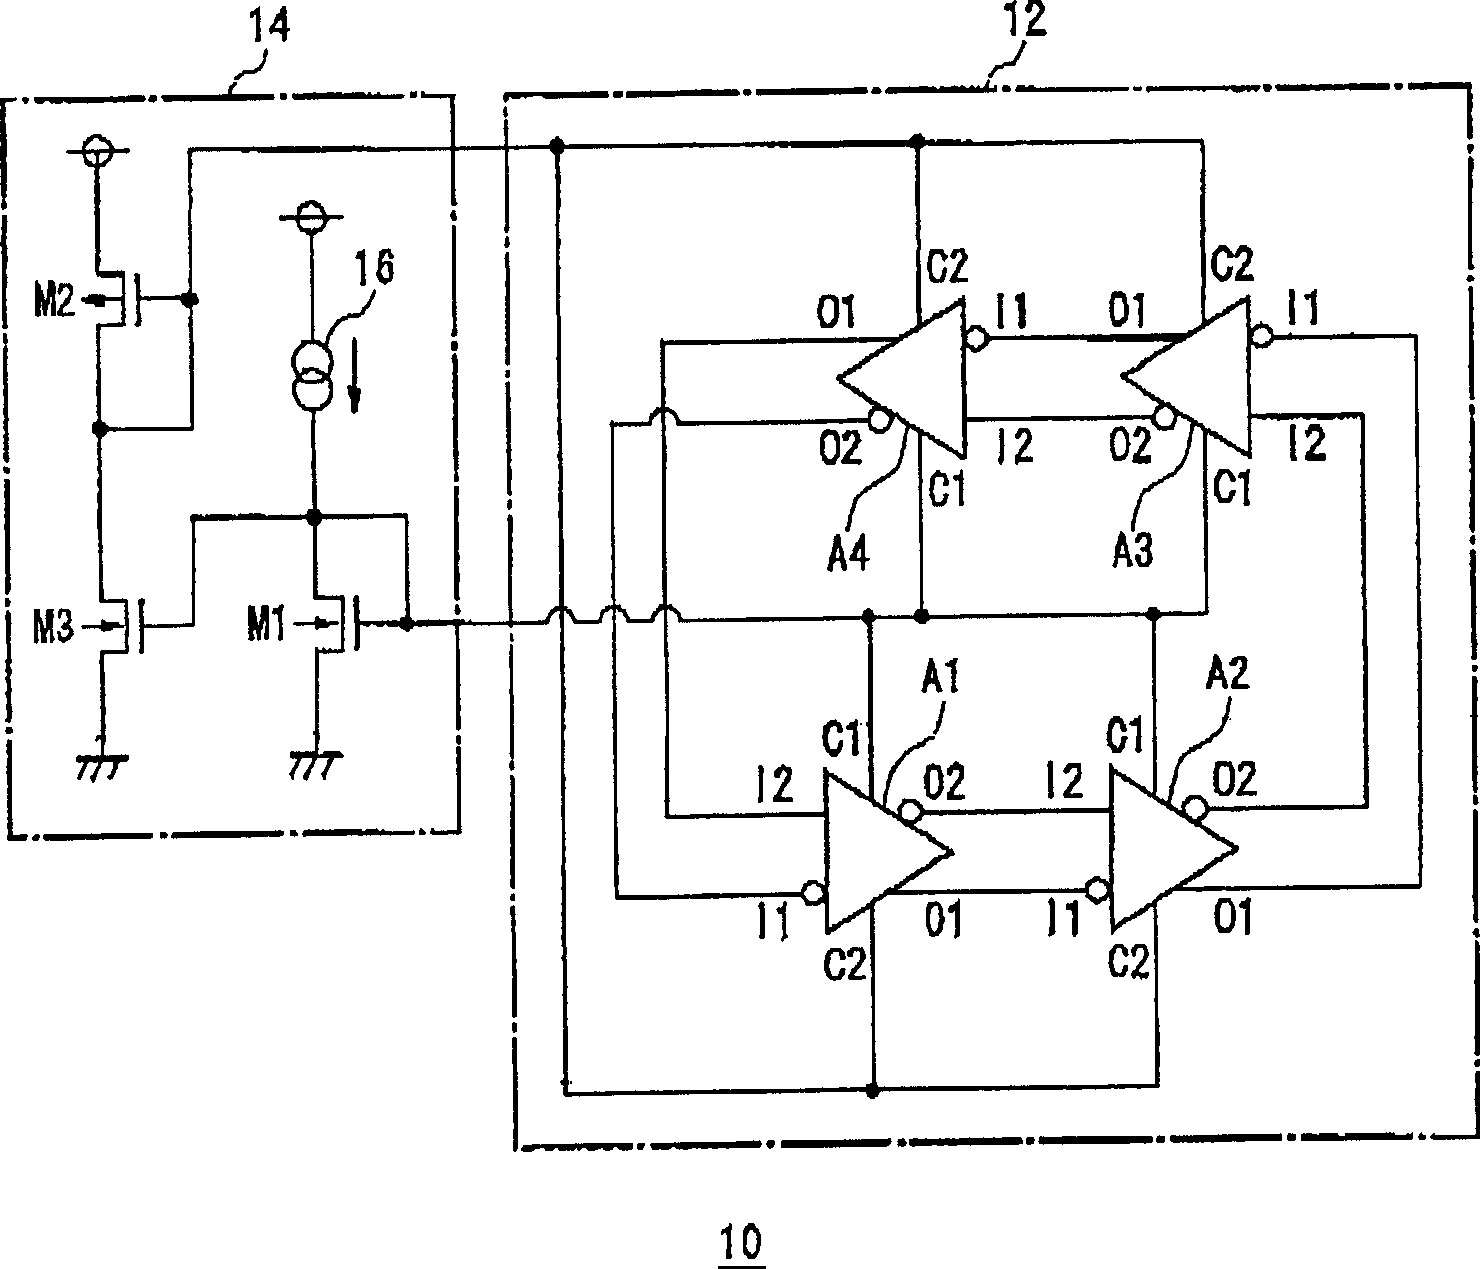 Ring oscillator circuit